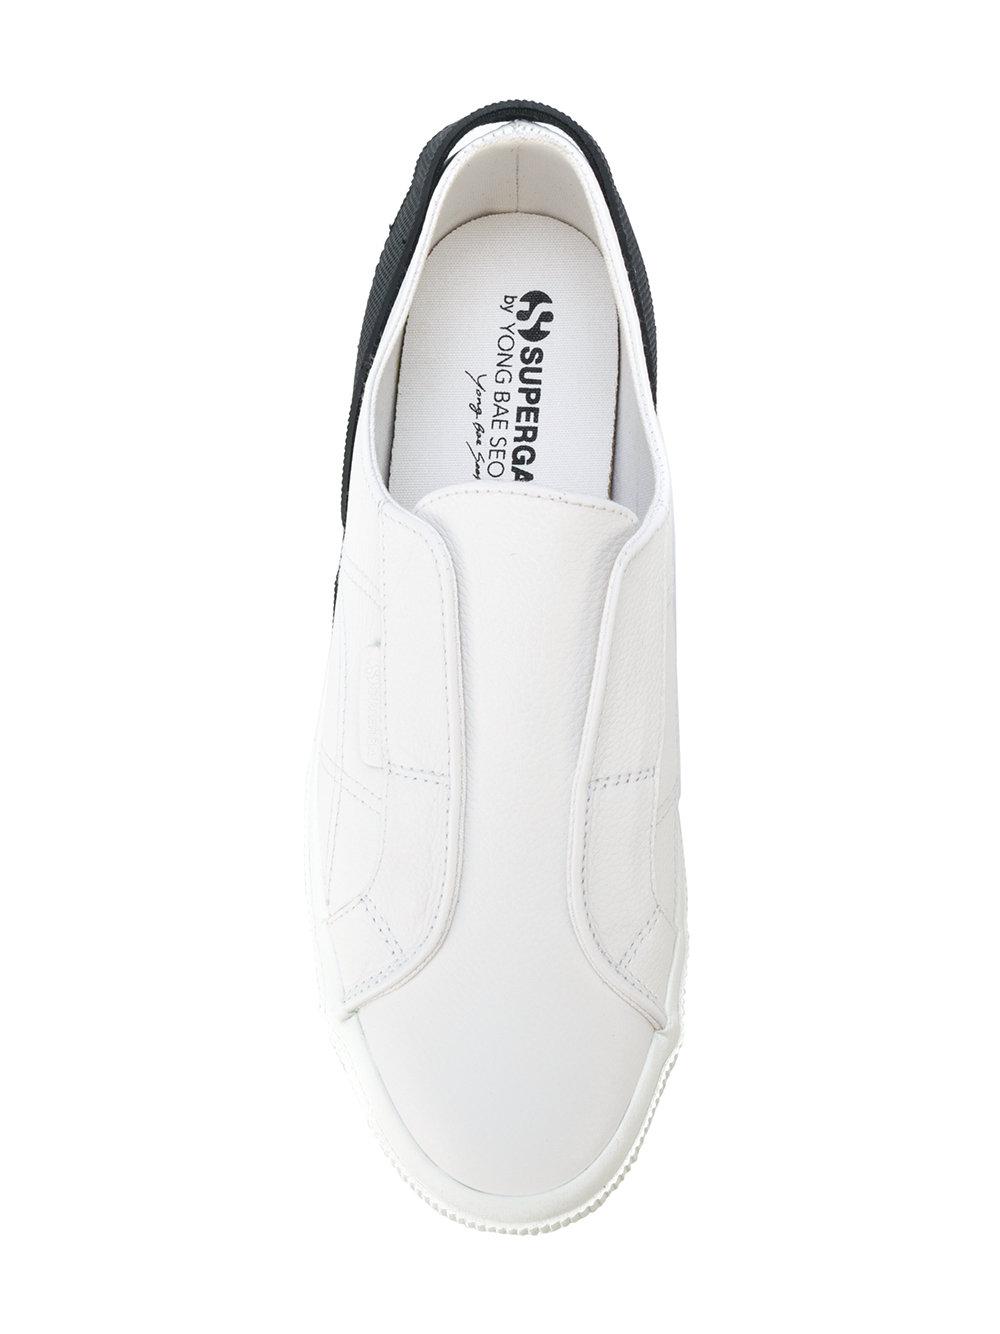 Superga Leather Slip On Sneakers in White for Men - Lyst